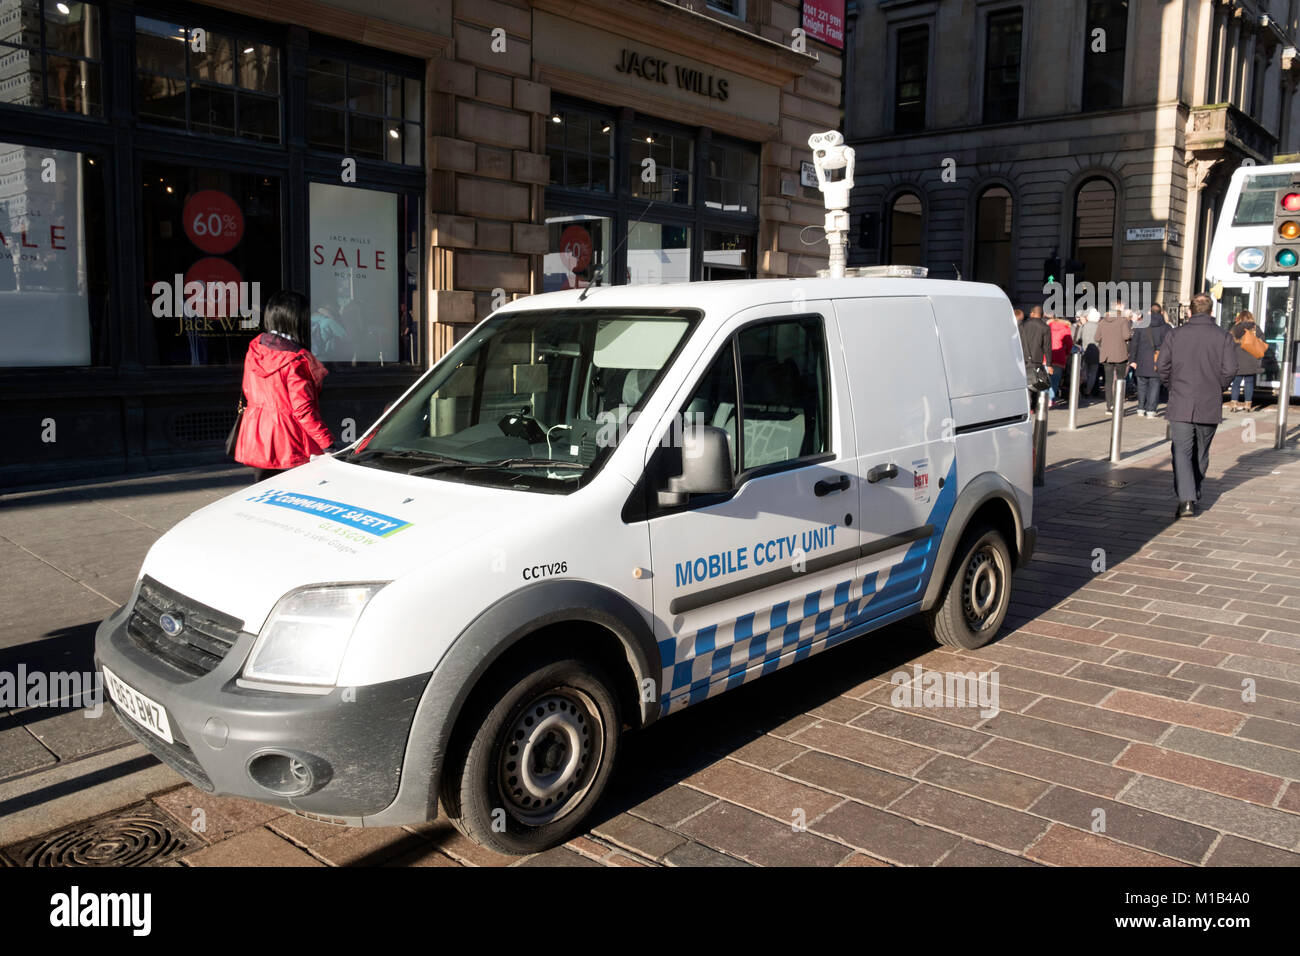 Mobile cctv surveillance camera vehicle in Glasgow city centre, Scotland, United Kingdom Stock Photo